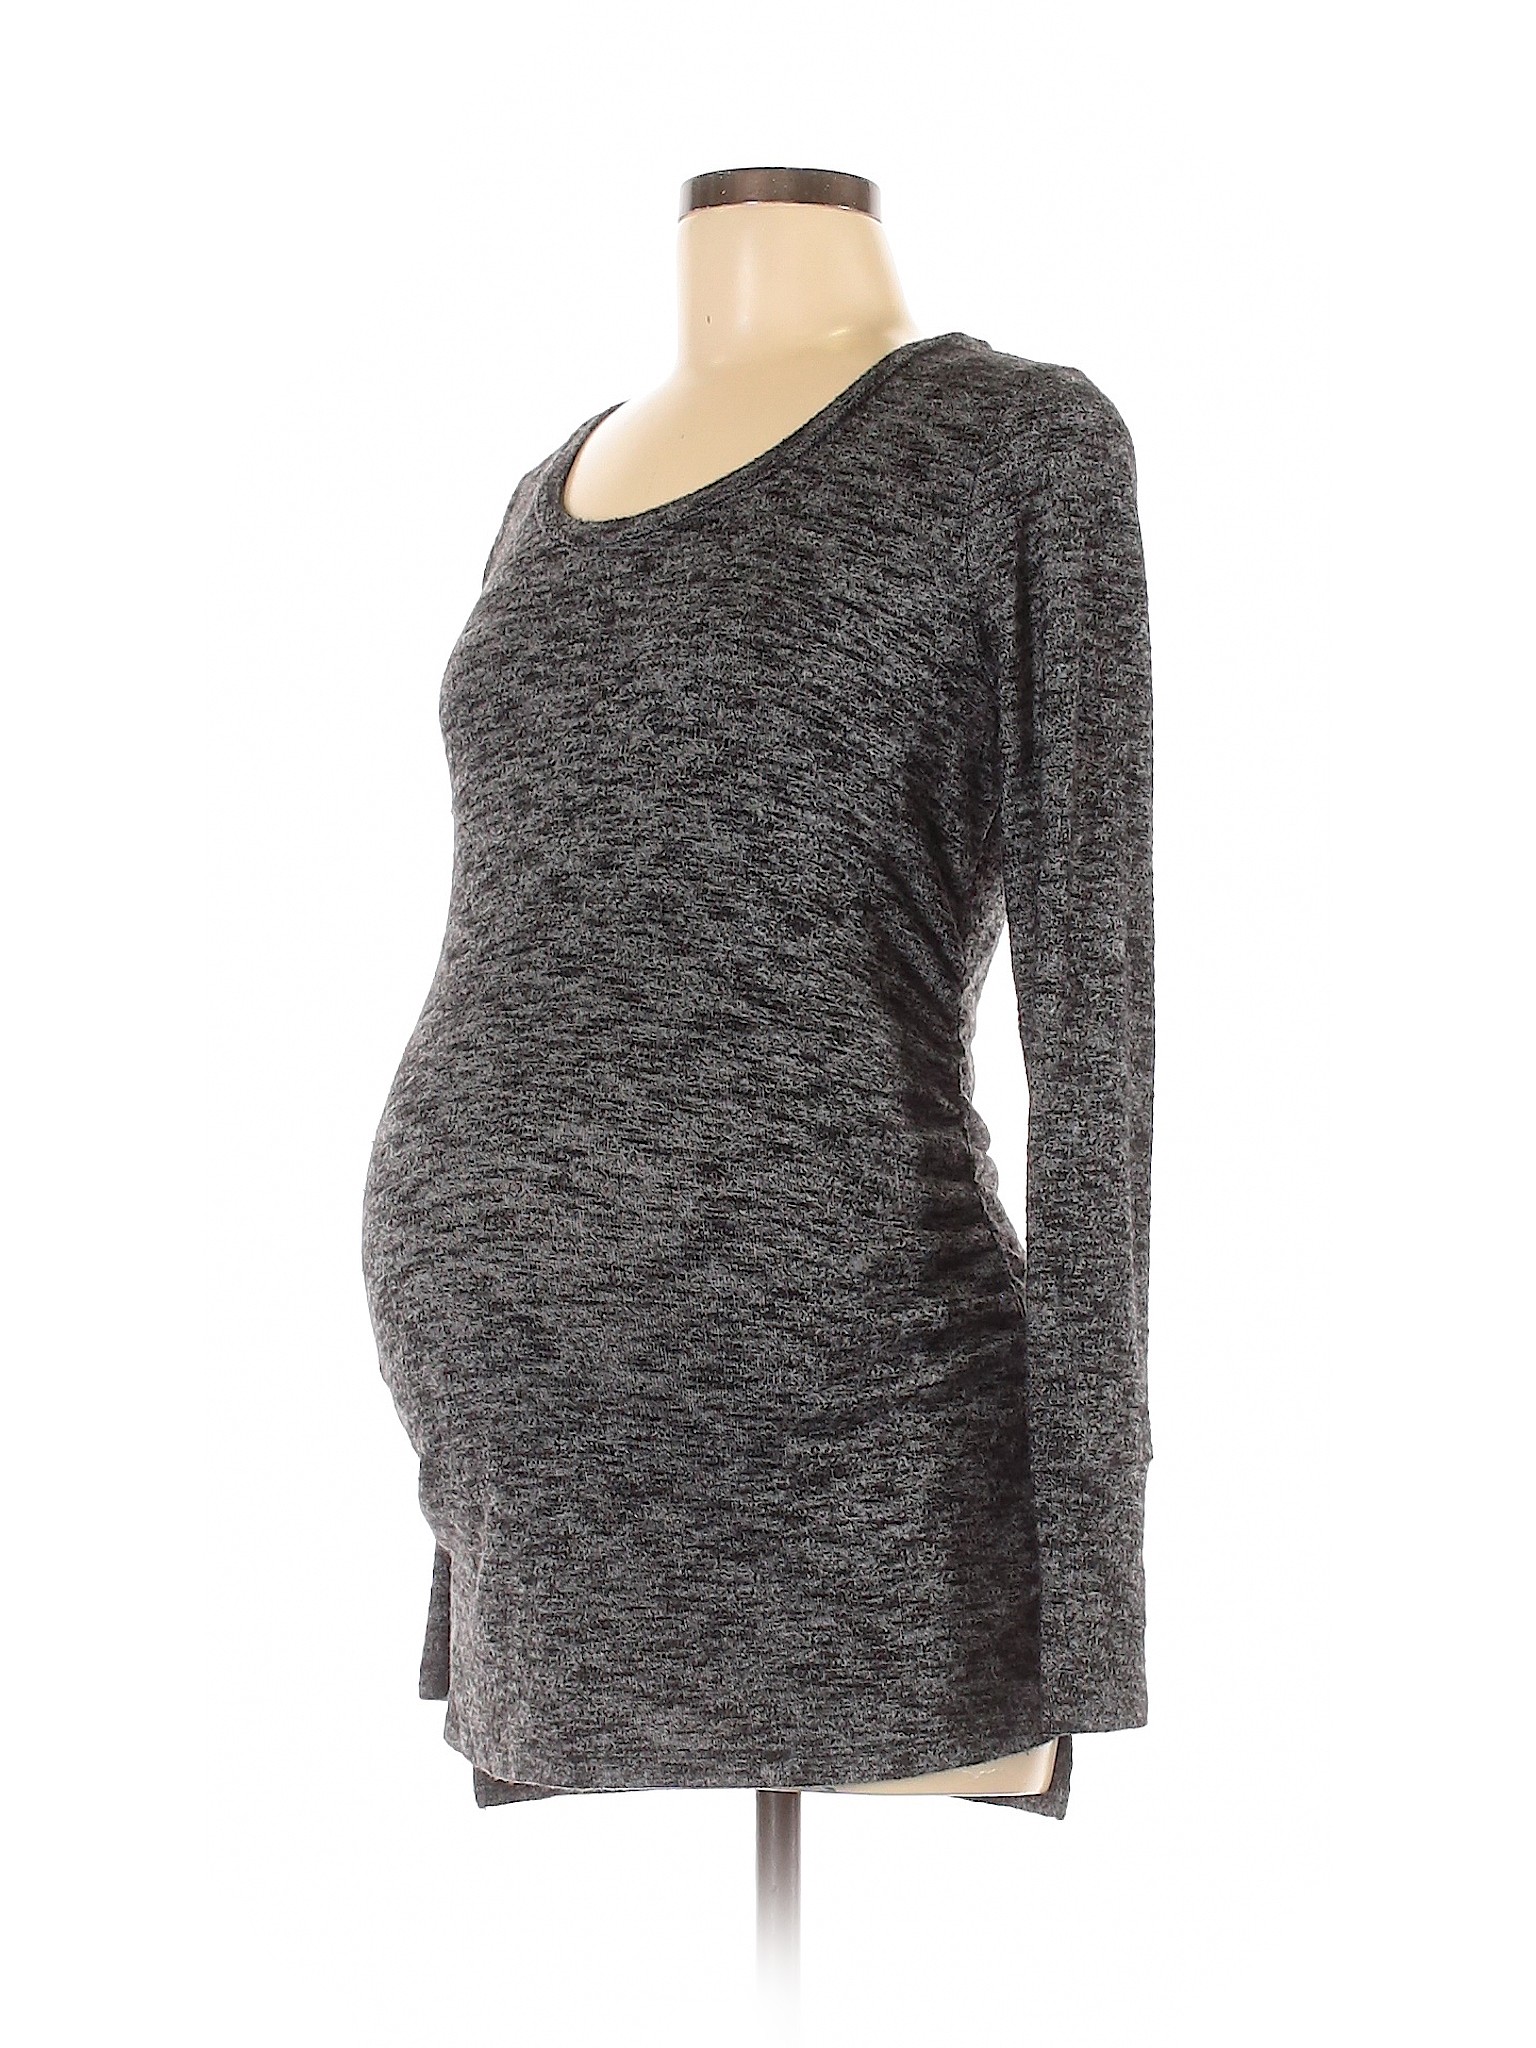 Liz Lange Maternity Women Gray Long Sleeve Top M Maternity | eBay